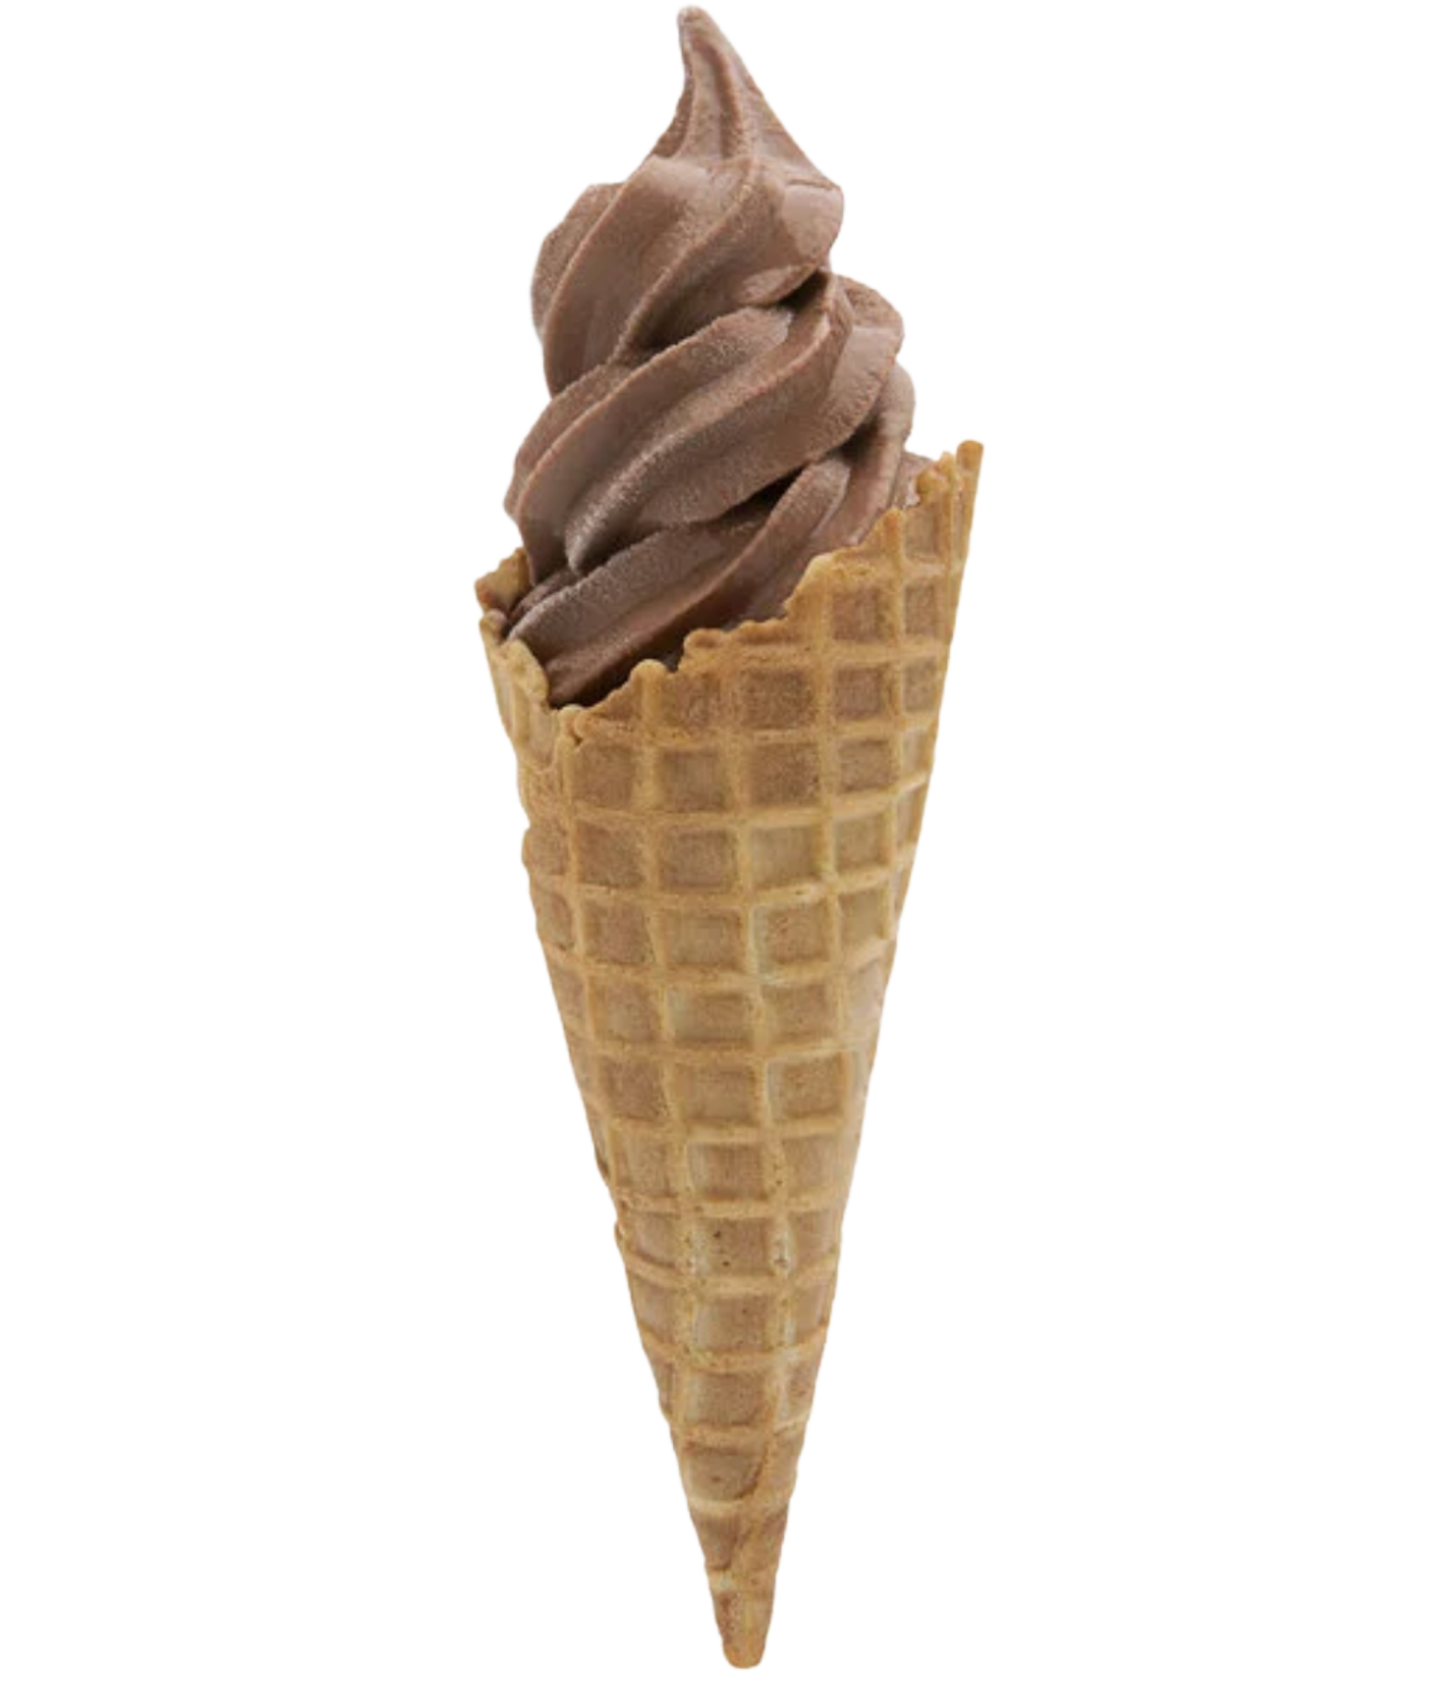 Frostline Chocolate Soft Serve Ice Cream 6lbs - 6 pack